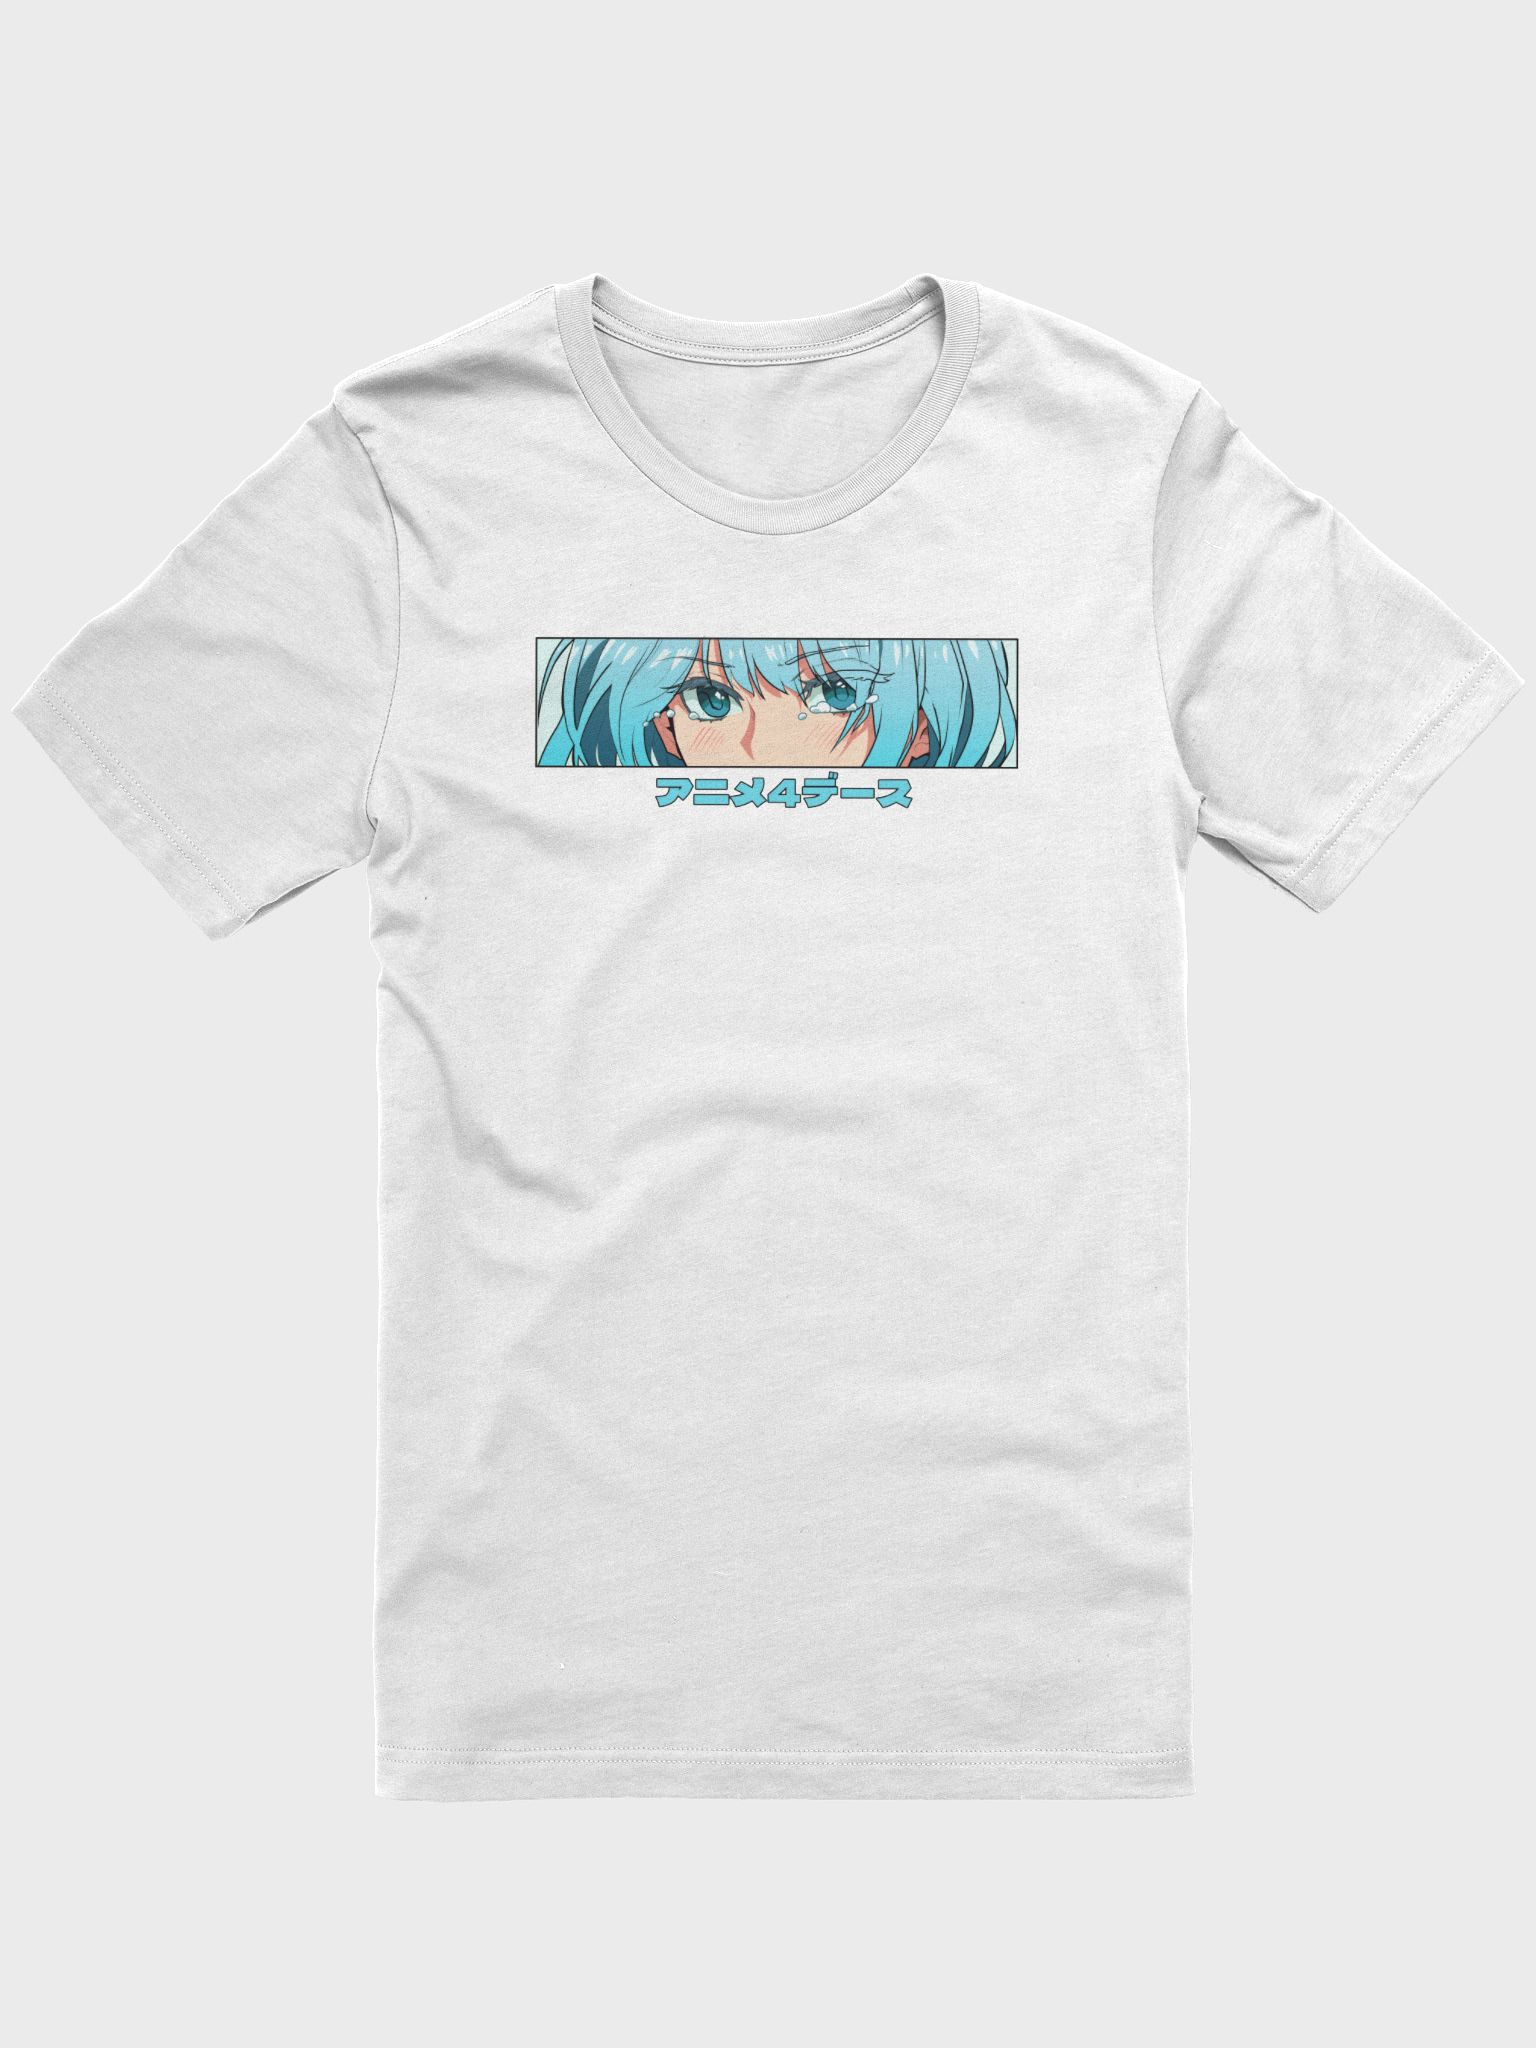 Anime4days T-shirt (white) | Anime4days